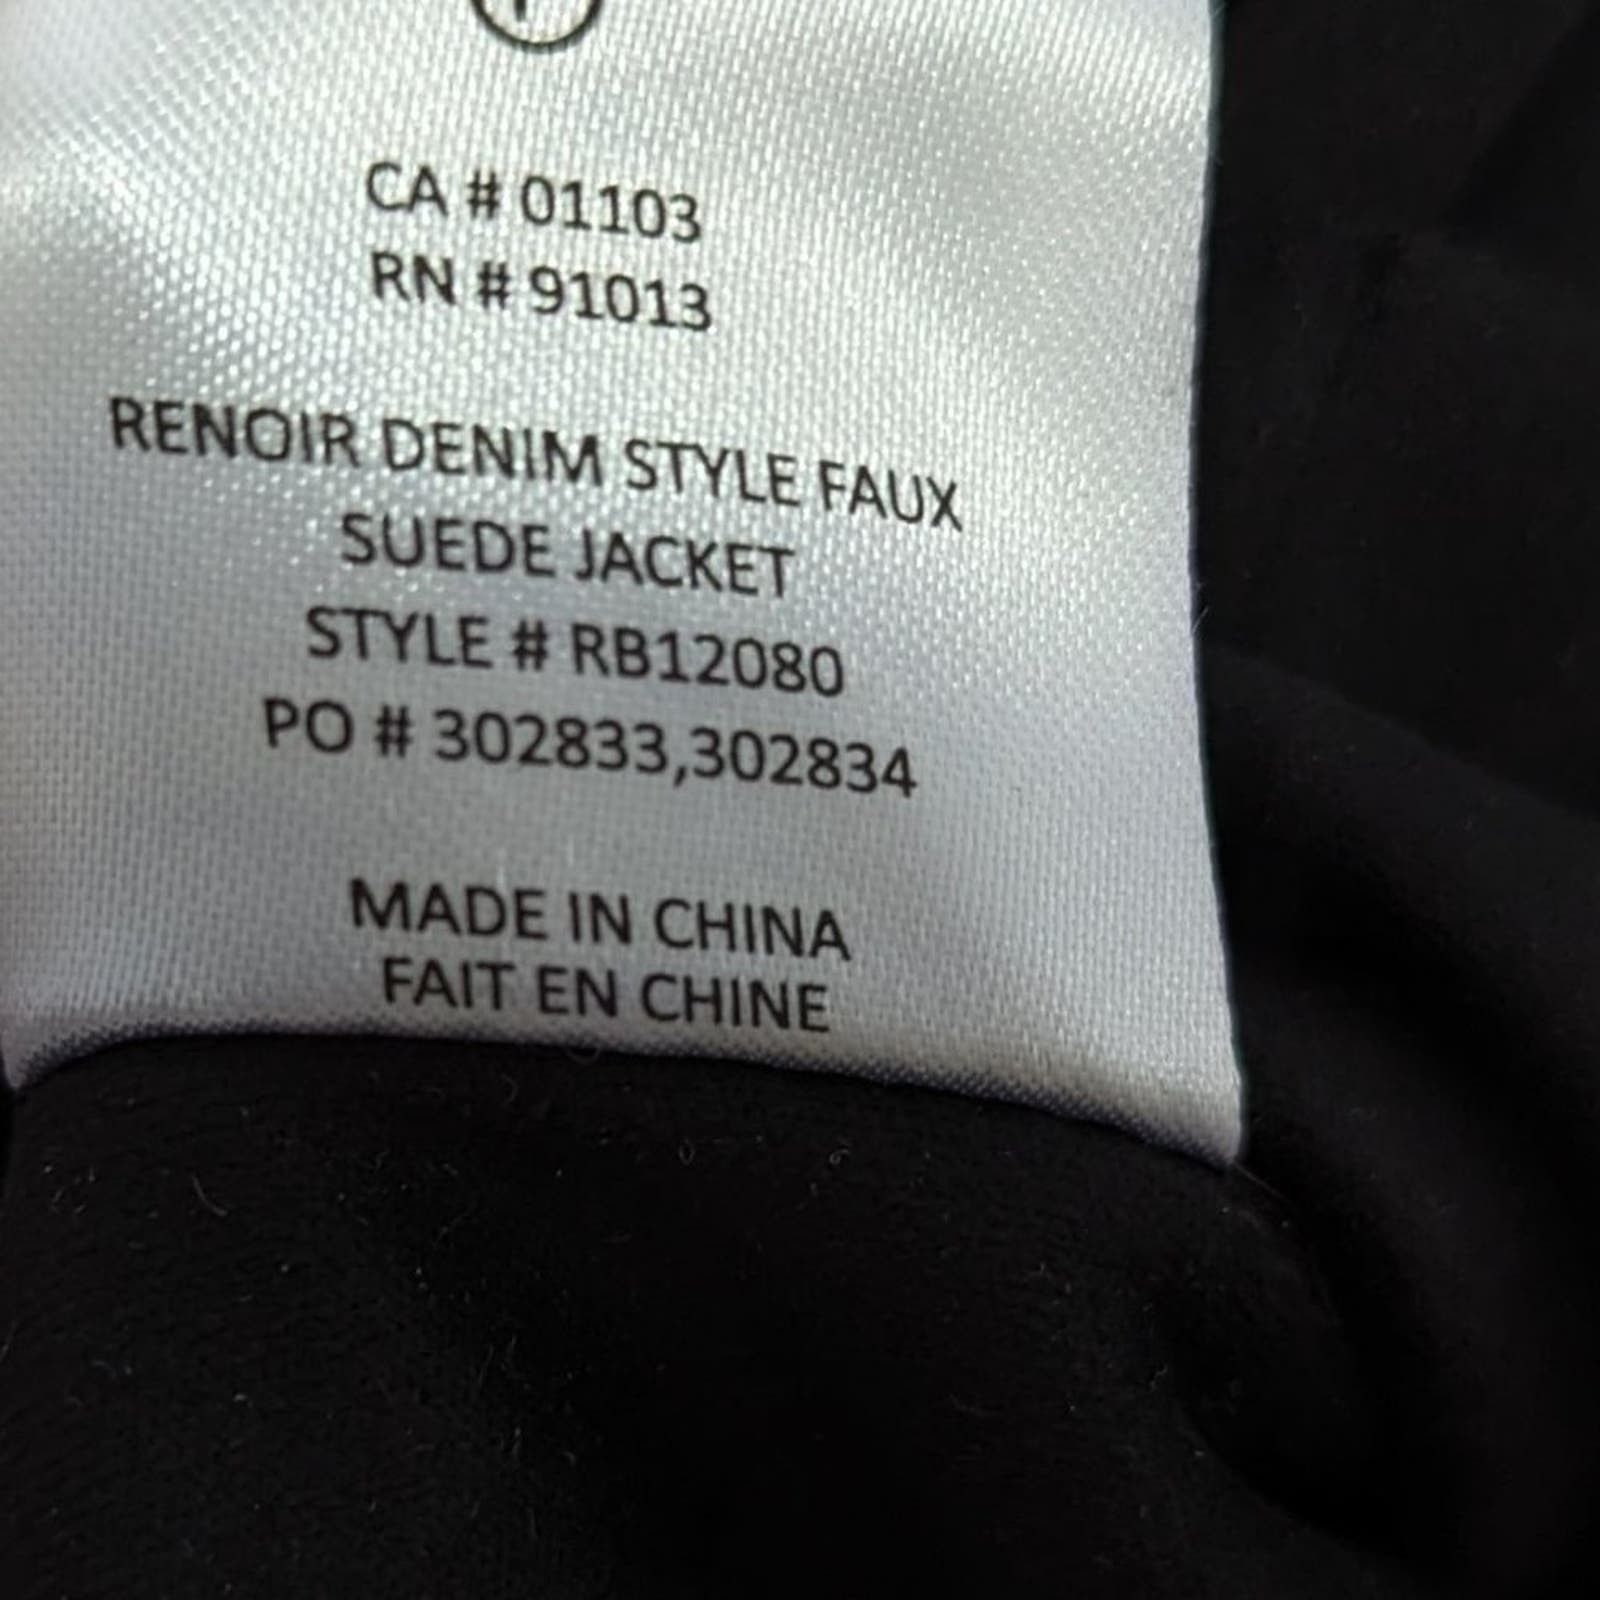 Robert Barakett Robert Barakett Black Renoir Denim Style Jacket Faux Suede S Size US S / EU 44-46 / 1 - 10 Preview